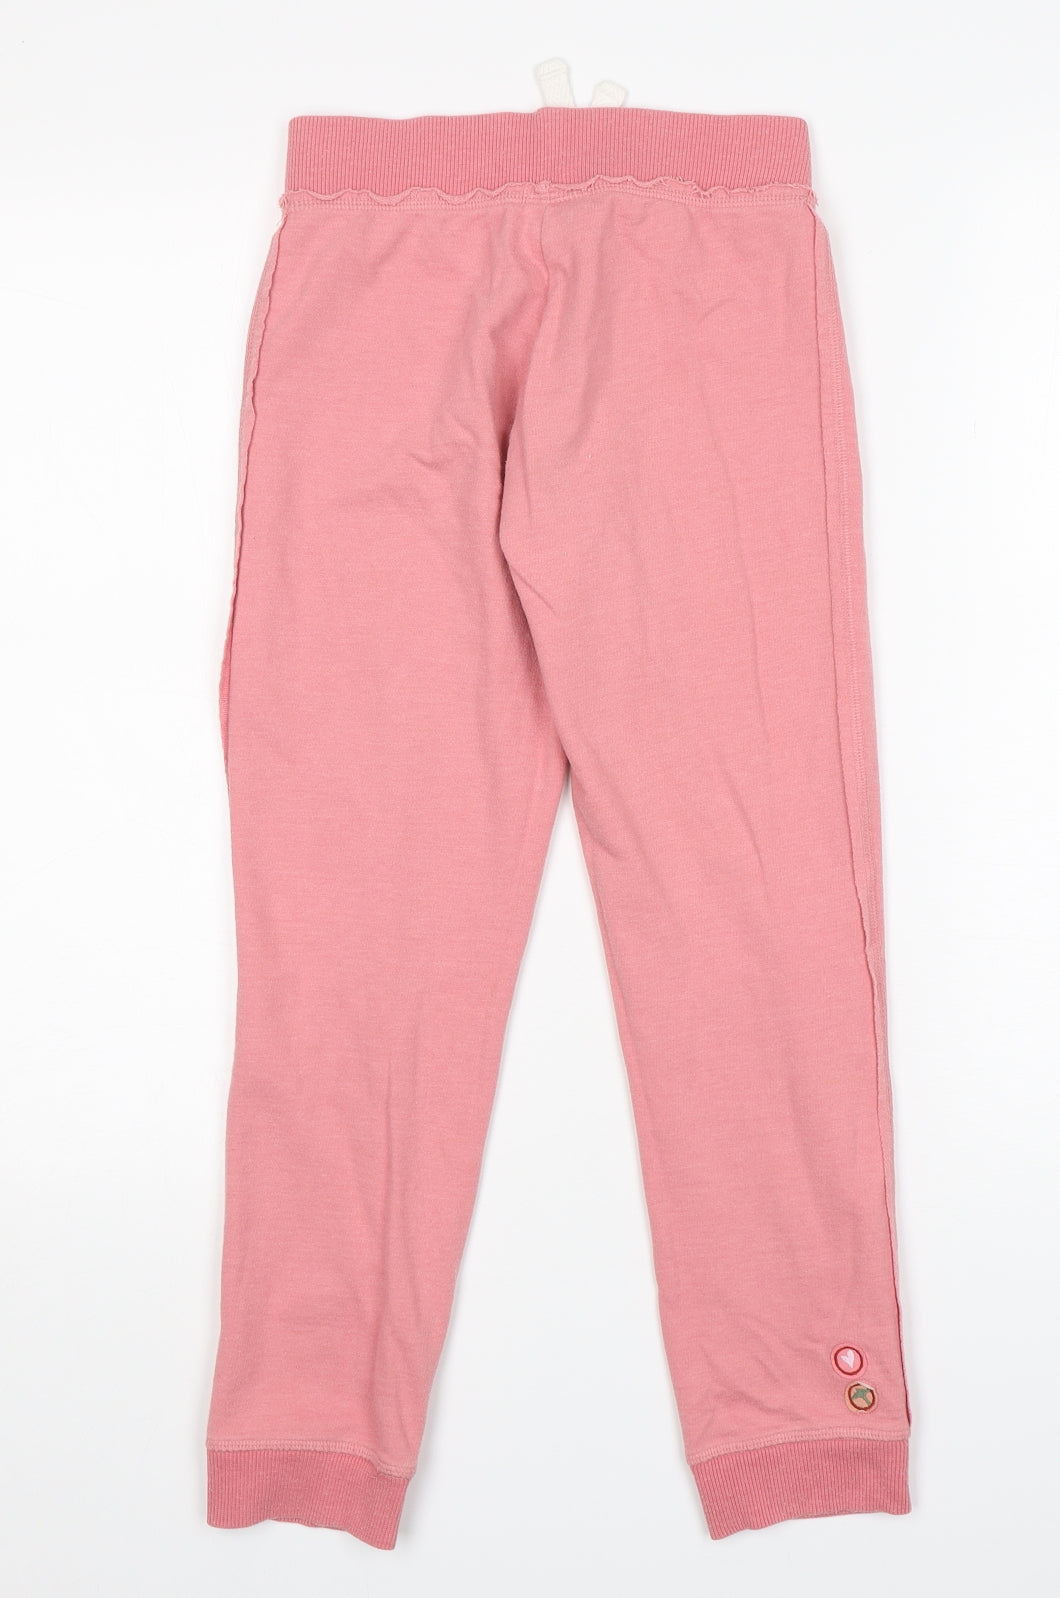 NEXT Girls Pink  Cotton Sweatpants Trousers Size 9 Years  Regular Drawstring